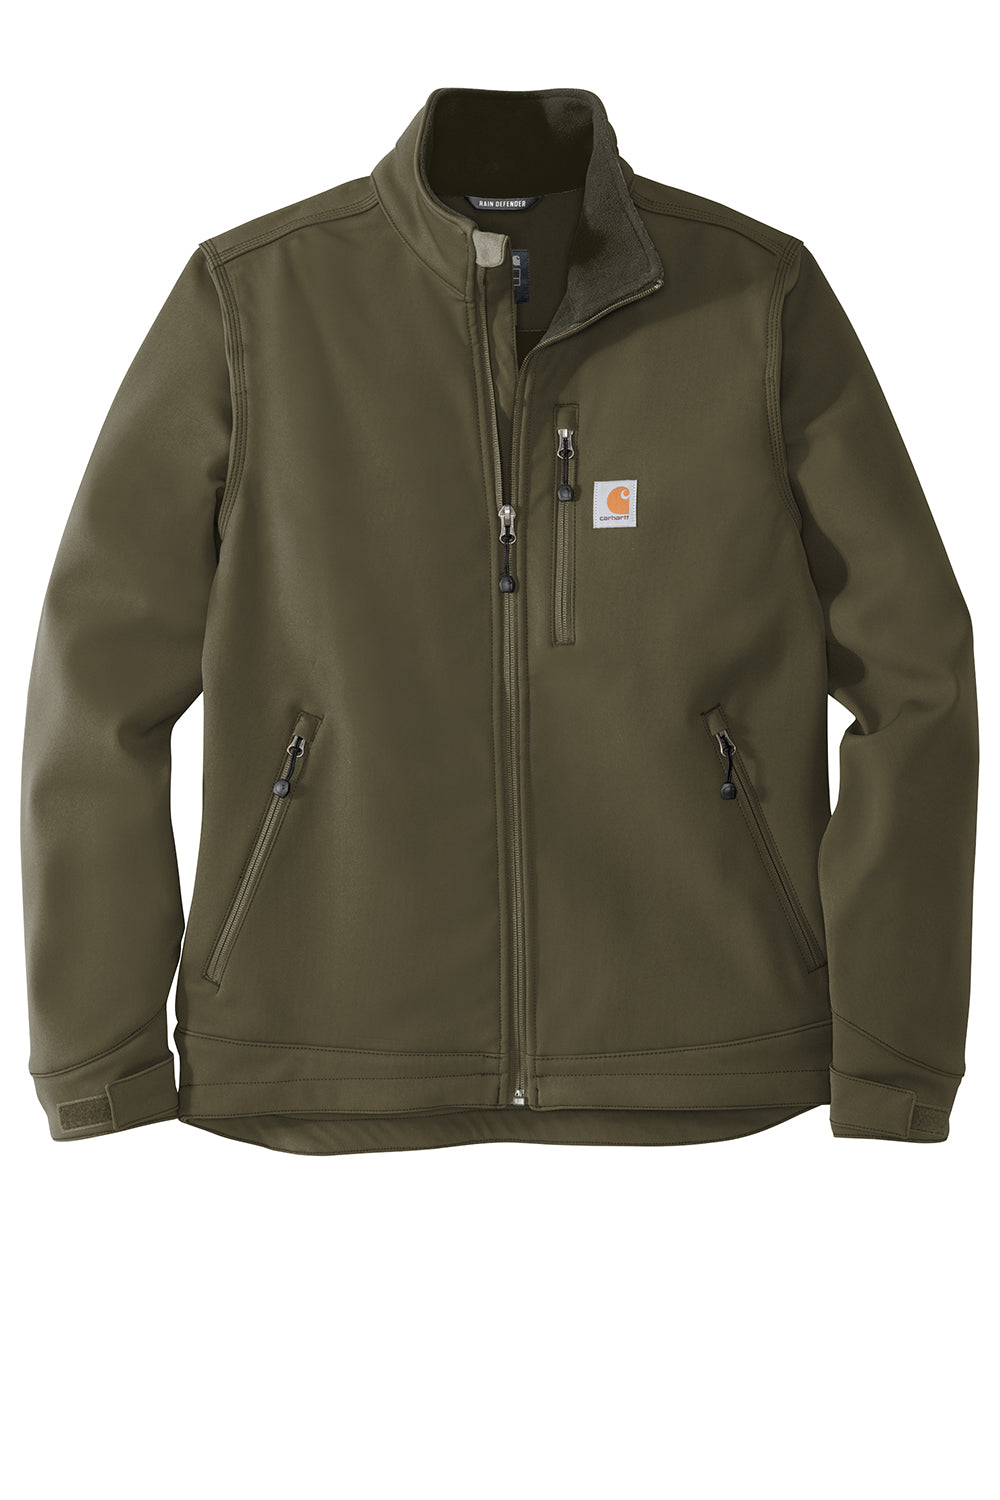 Carhartt CT102199 Mens Crowley Wind & Water Resistant Full Zip Jacket Moss Green Flat Front